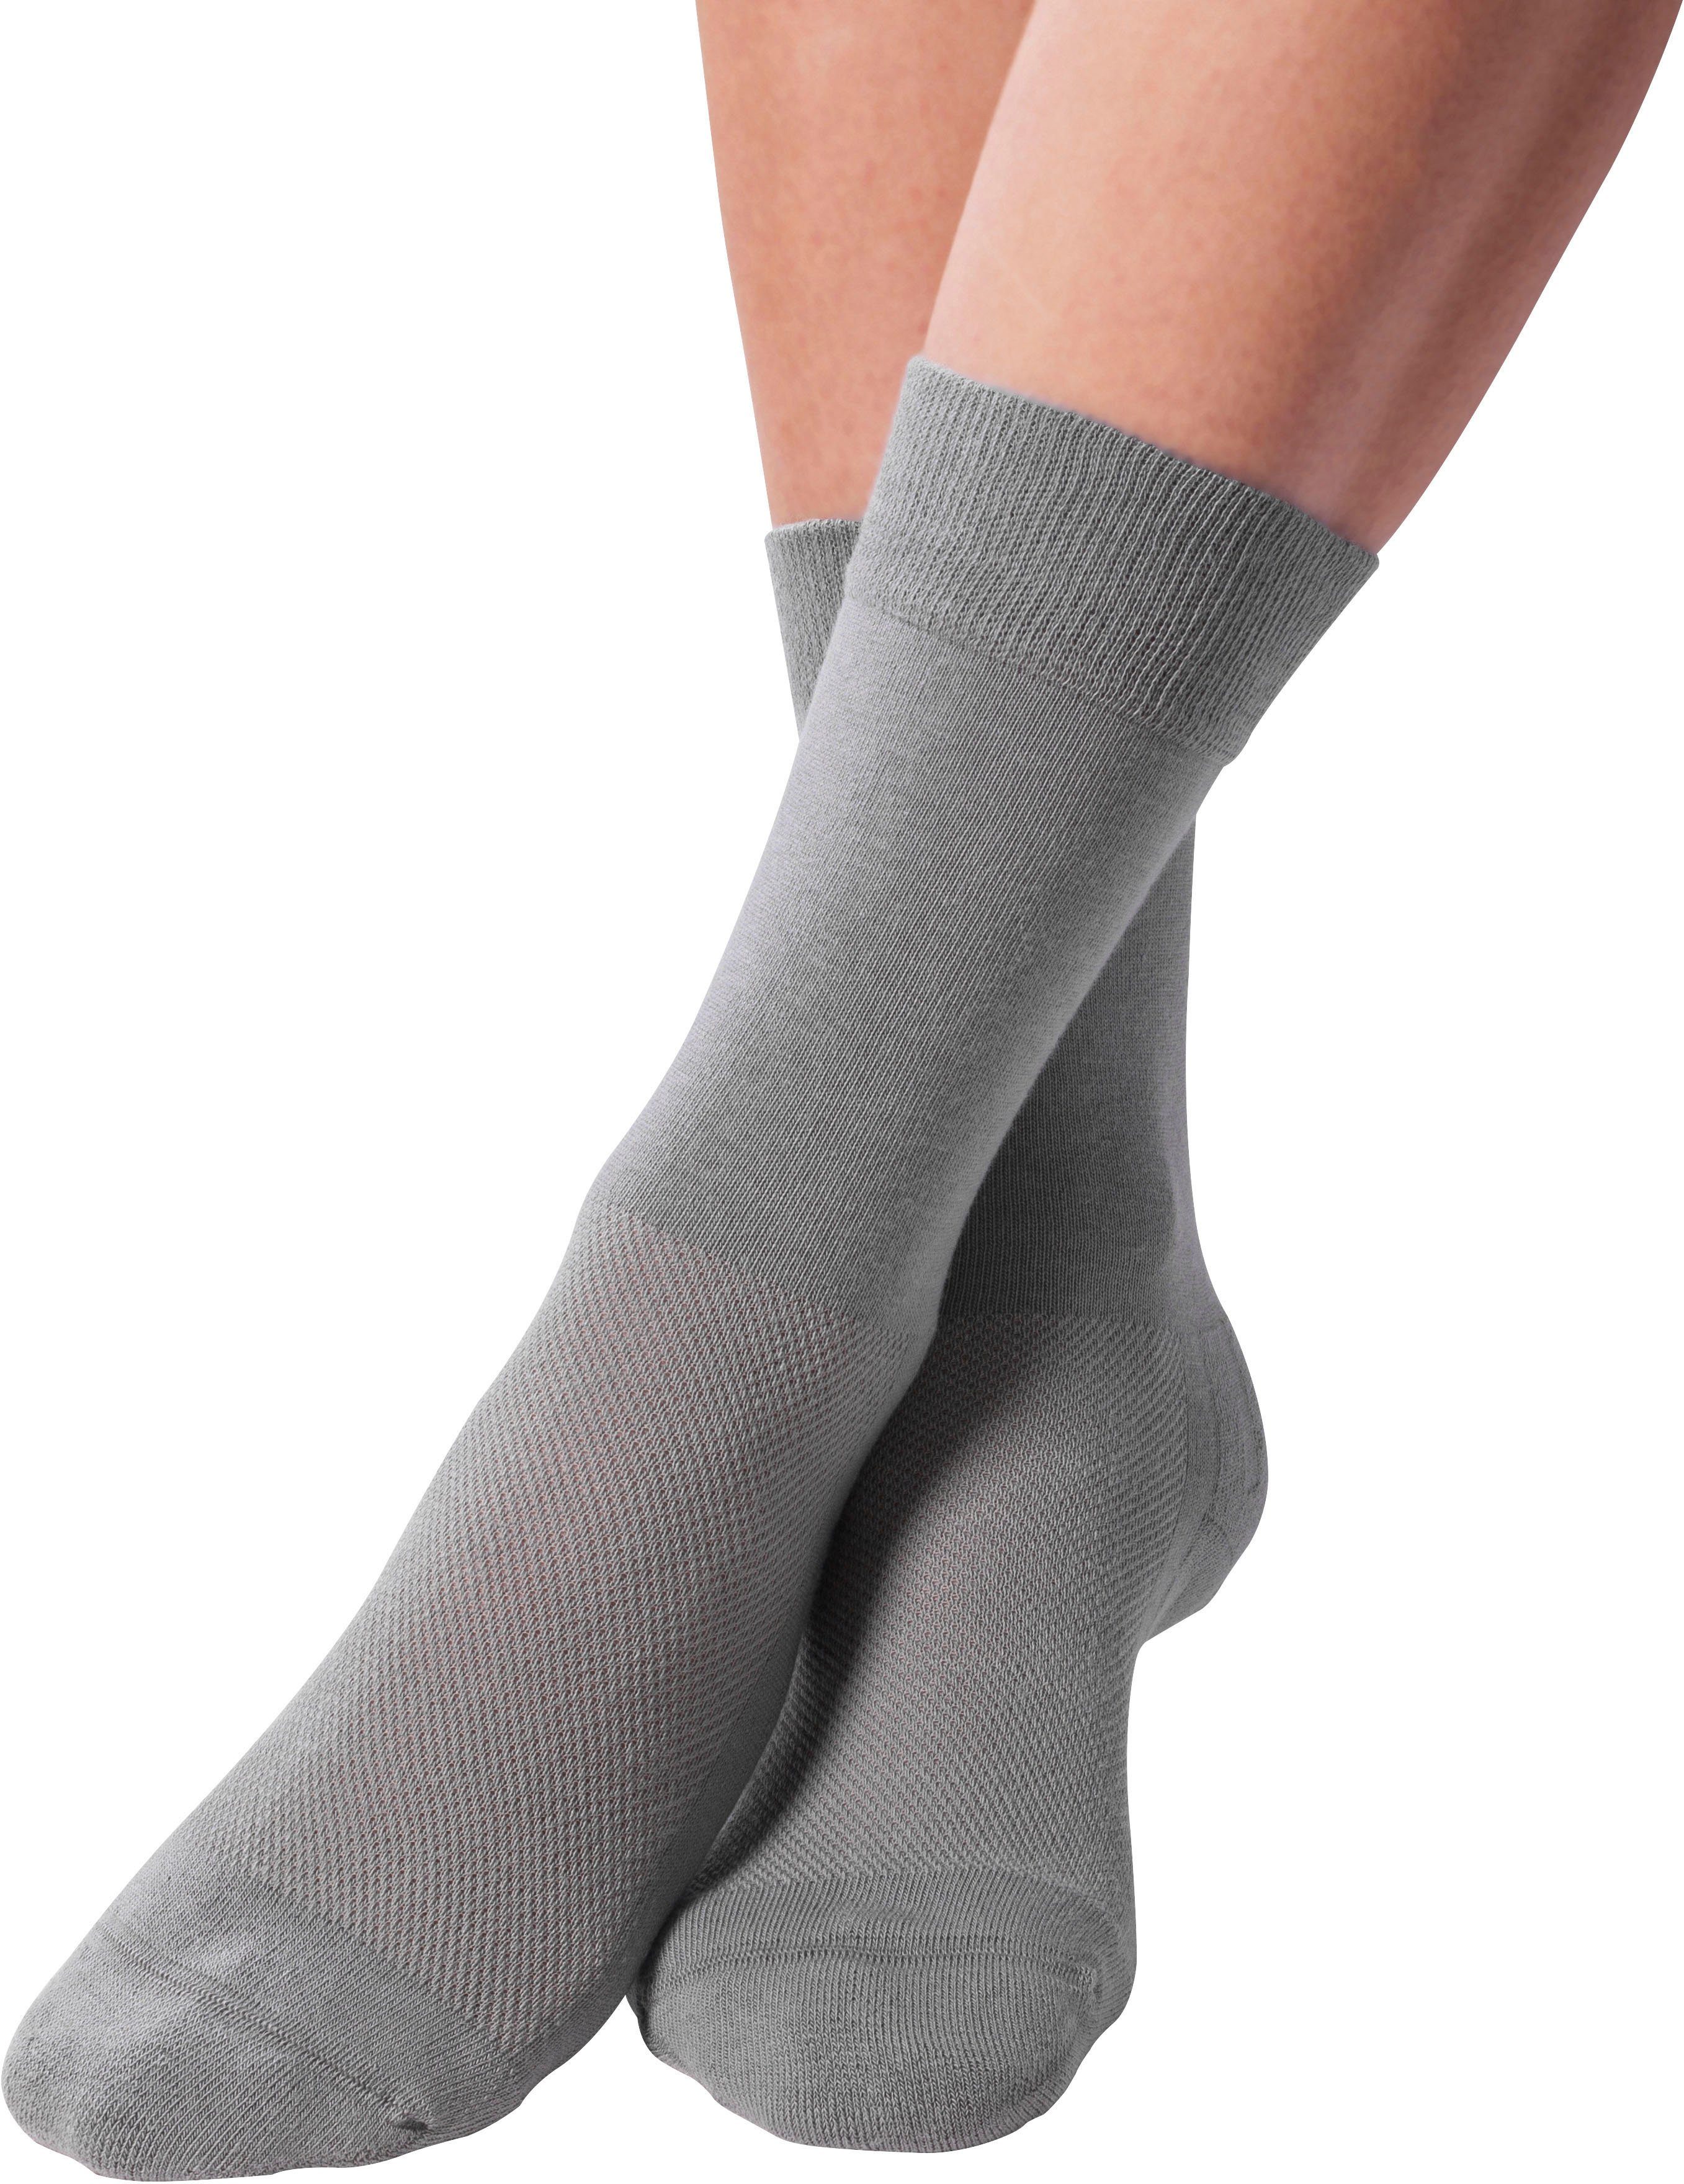 Fußgut Diabetikersocken Venenfeund Sensitiv grau (2-Paar) Socken